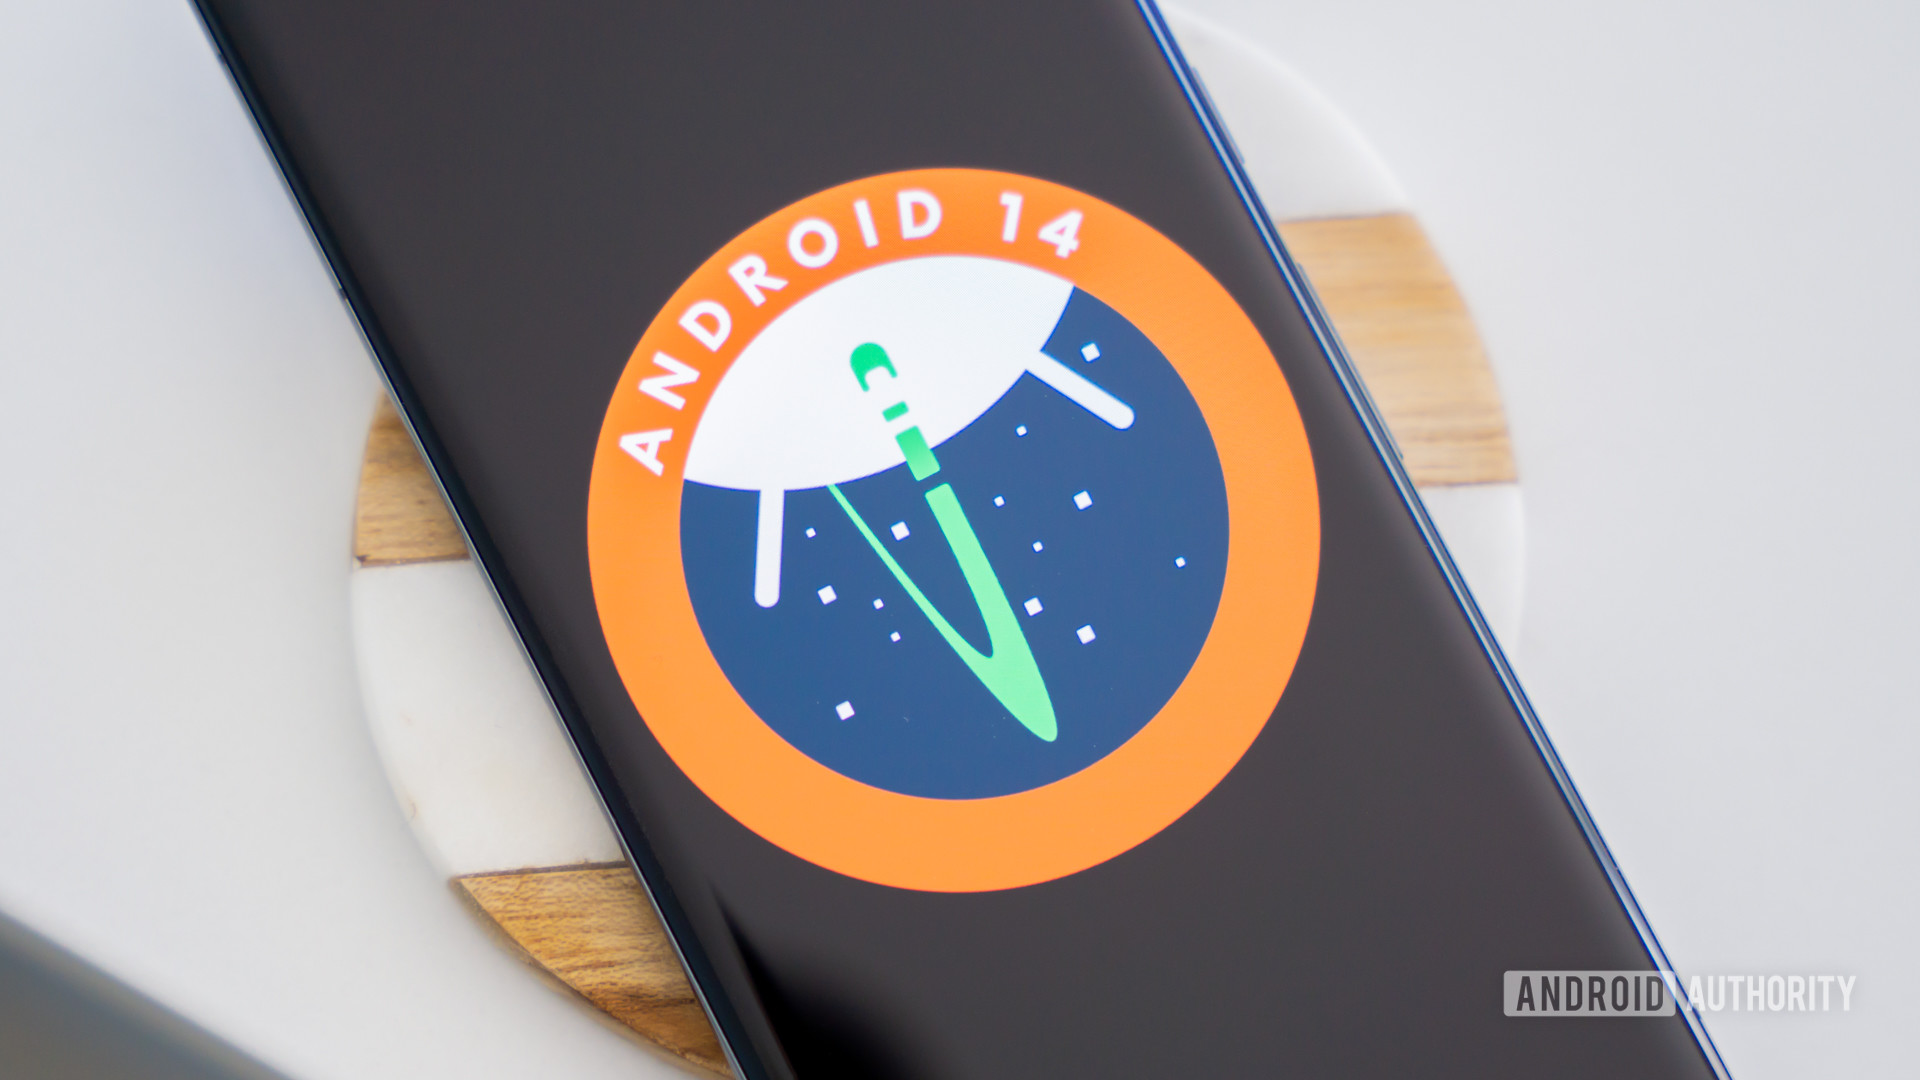 Android 14 logo stock photo 12